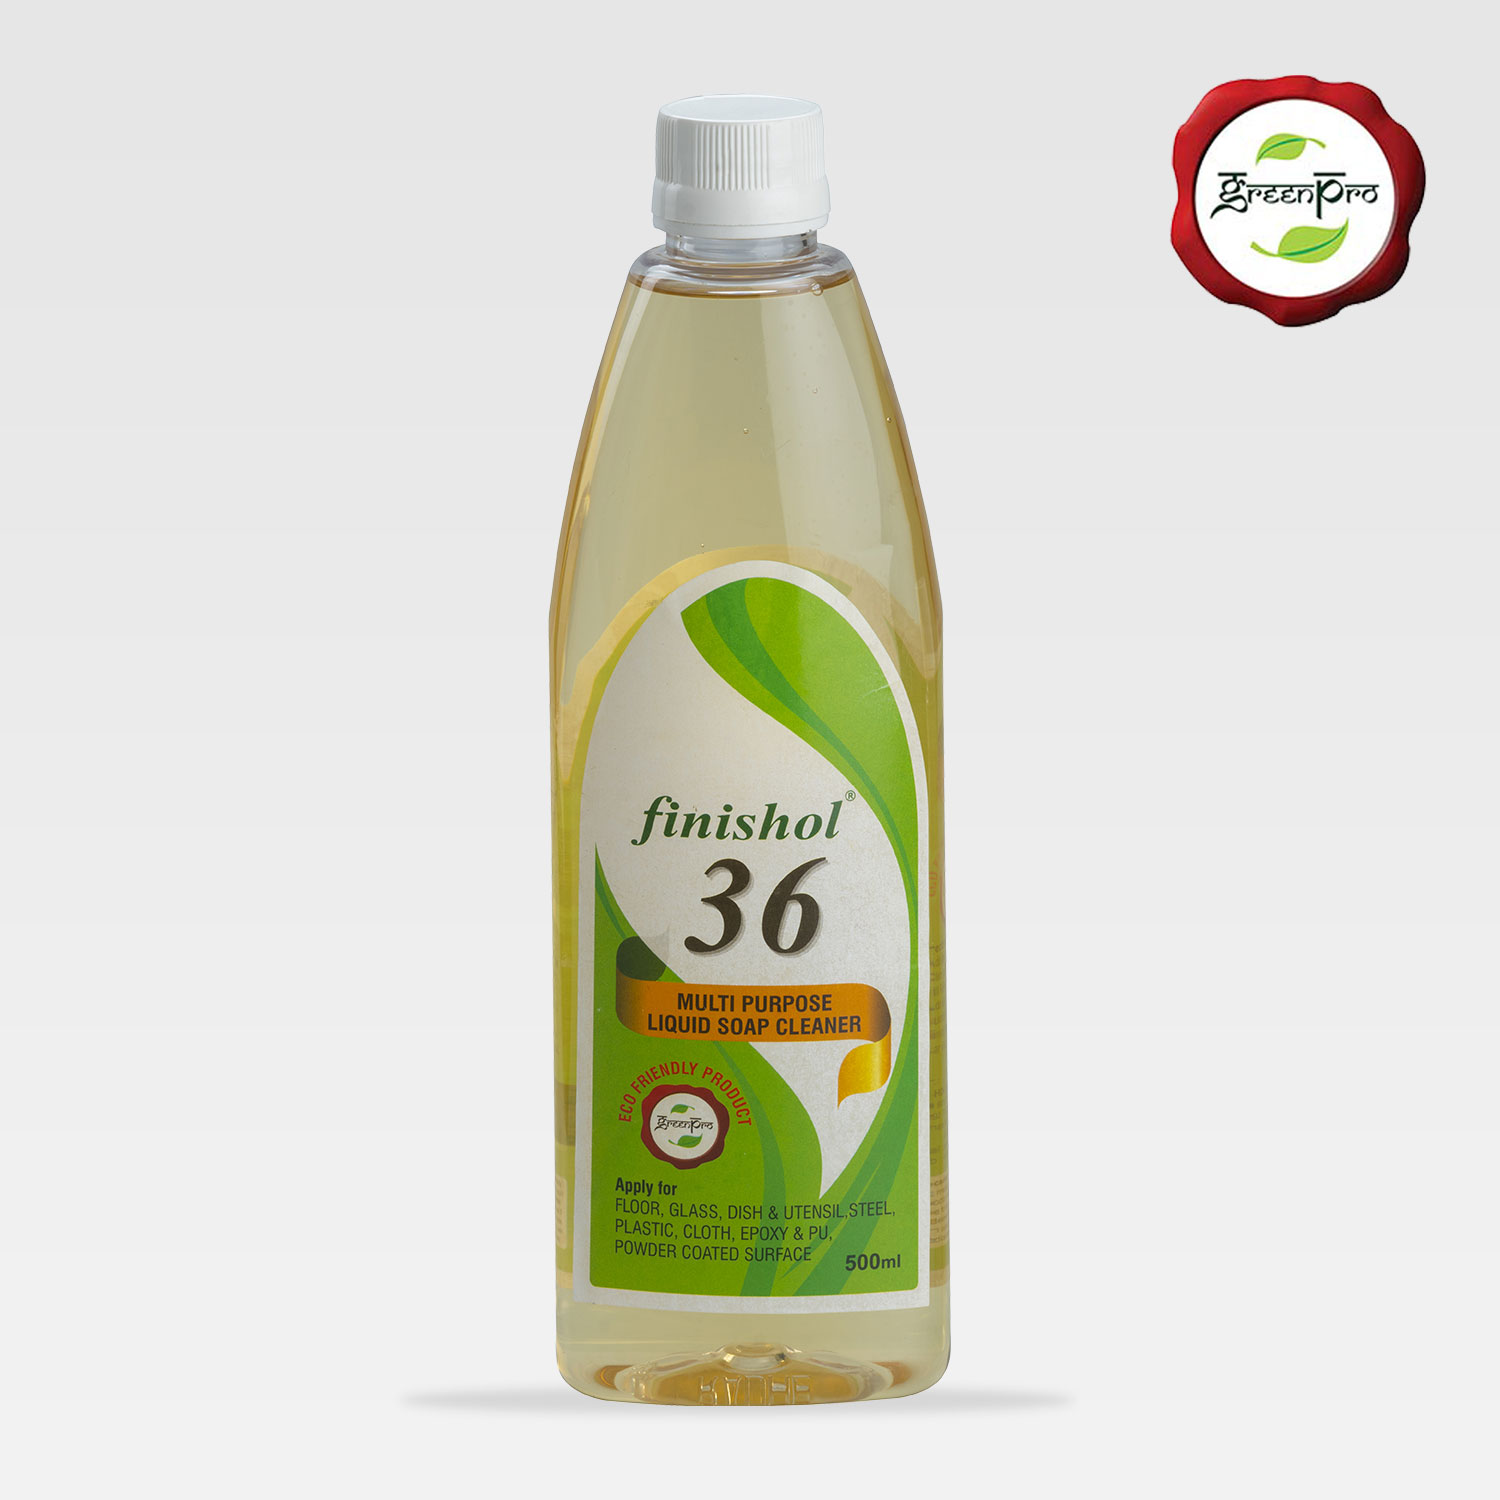 Eco-friendly Multi Purpose Liquid Soap Cleaner - Finishol 36